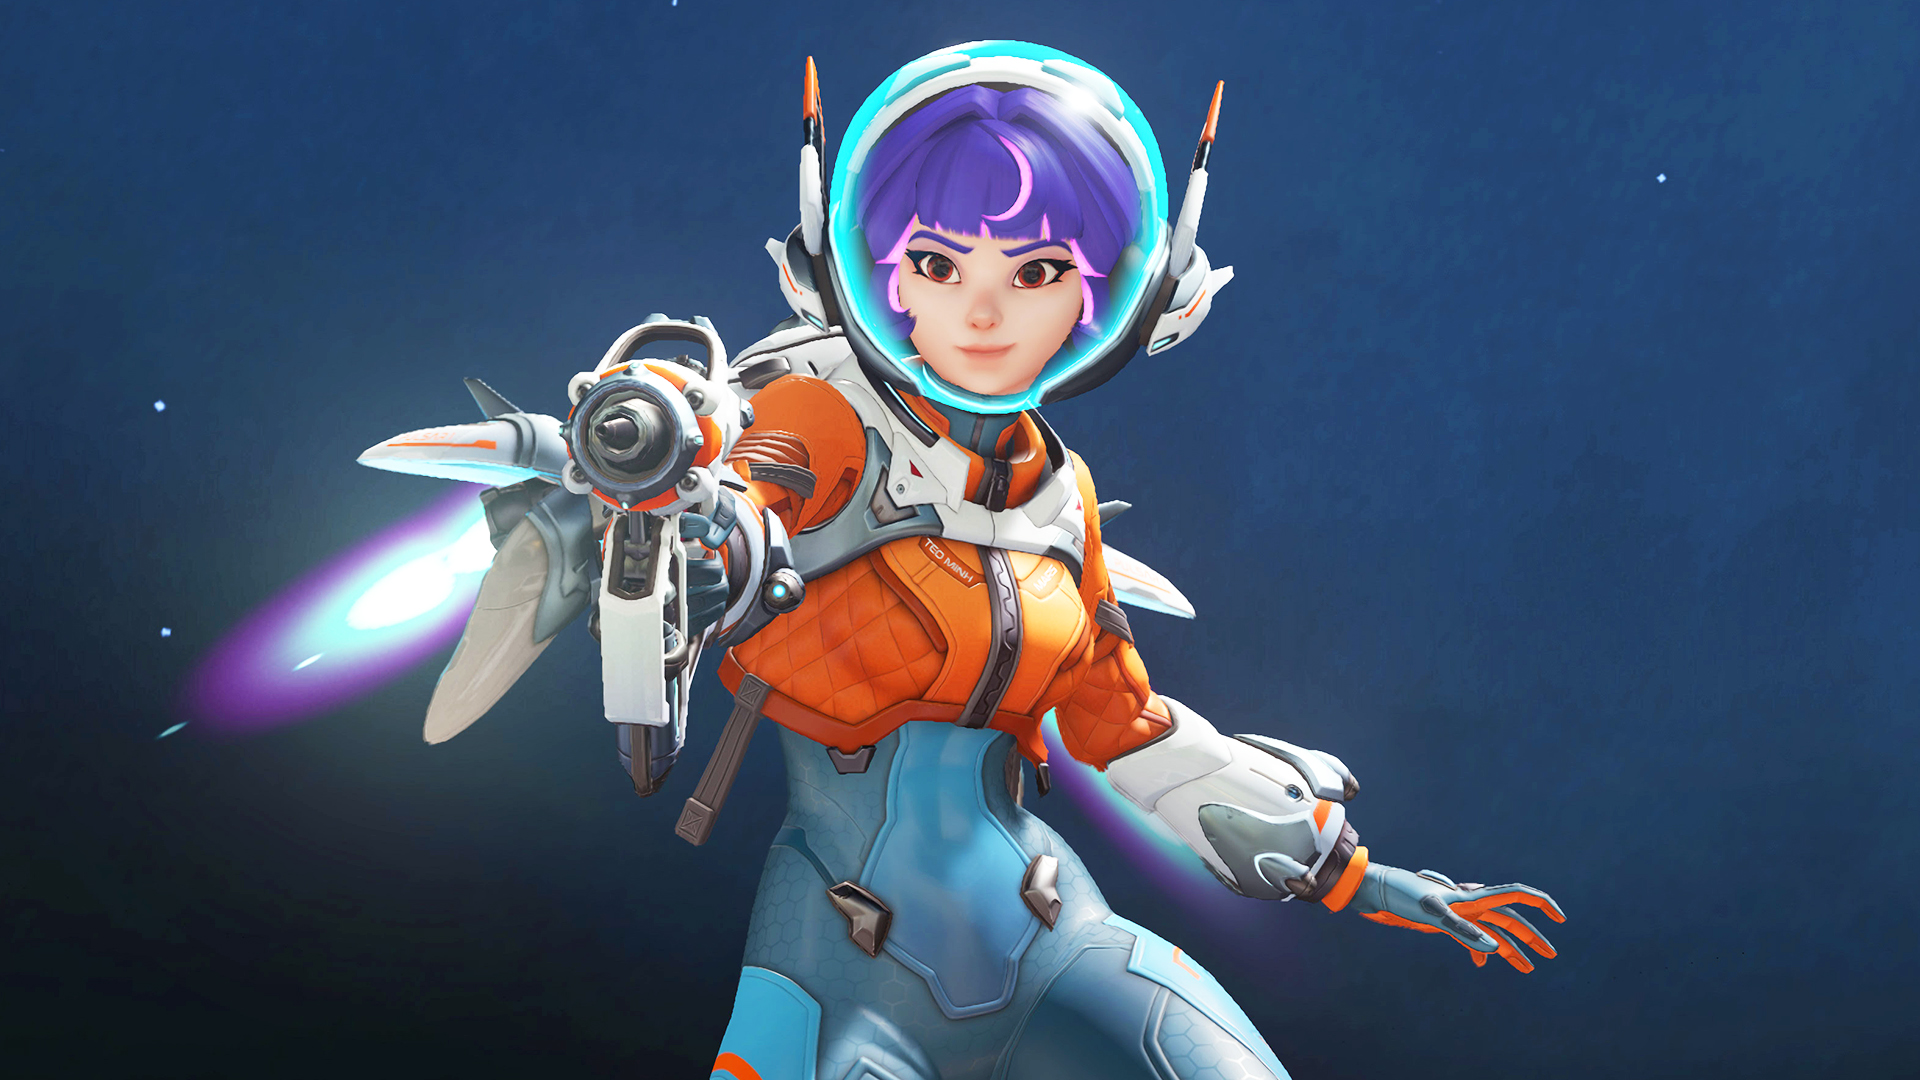 Overwatch 2's new hero Juno in her spacesuit and holding her mediblaster gun on a dark background